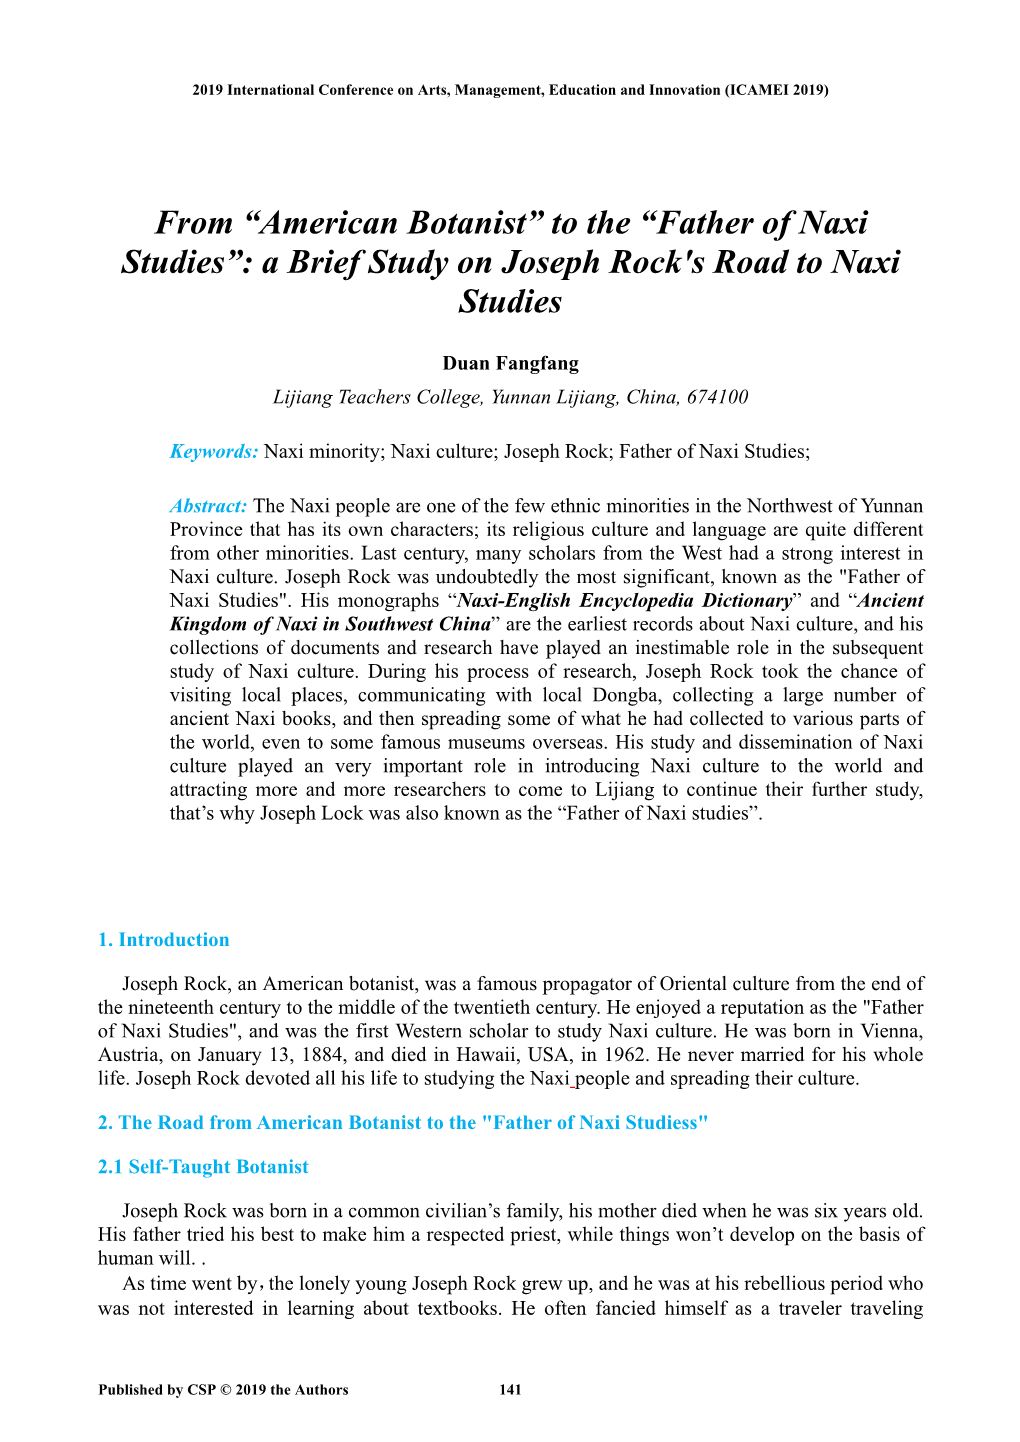 A Brief Study on Joseph Rock's Road to Naxi Studies